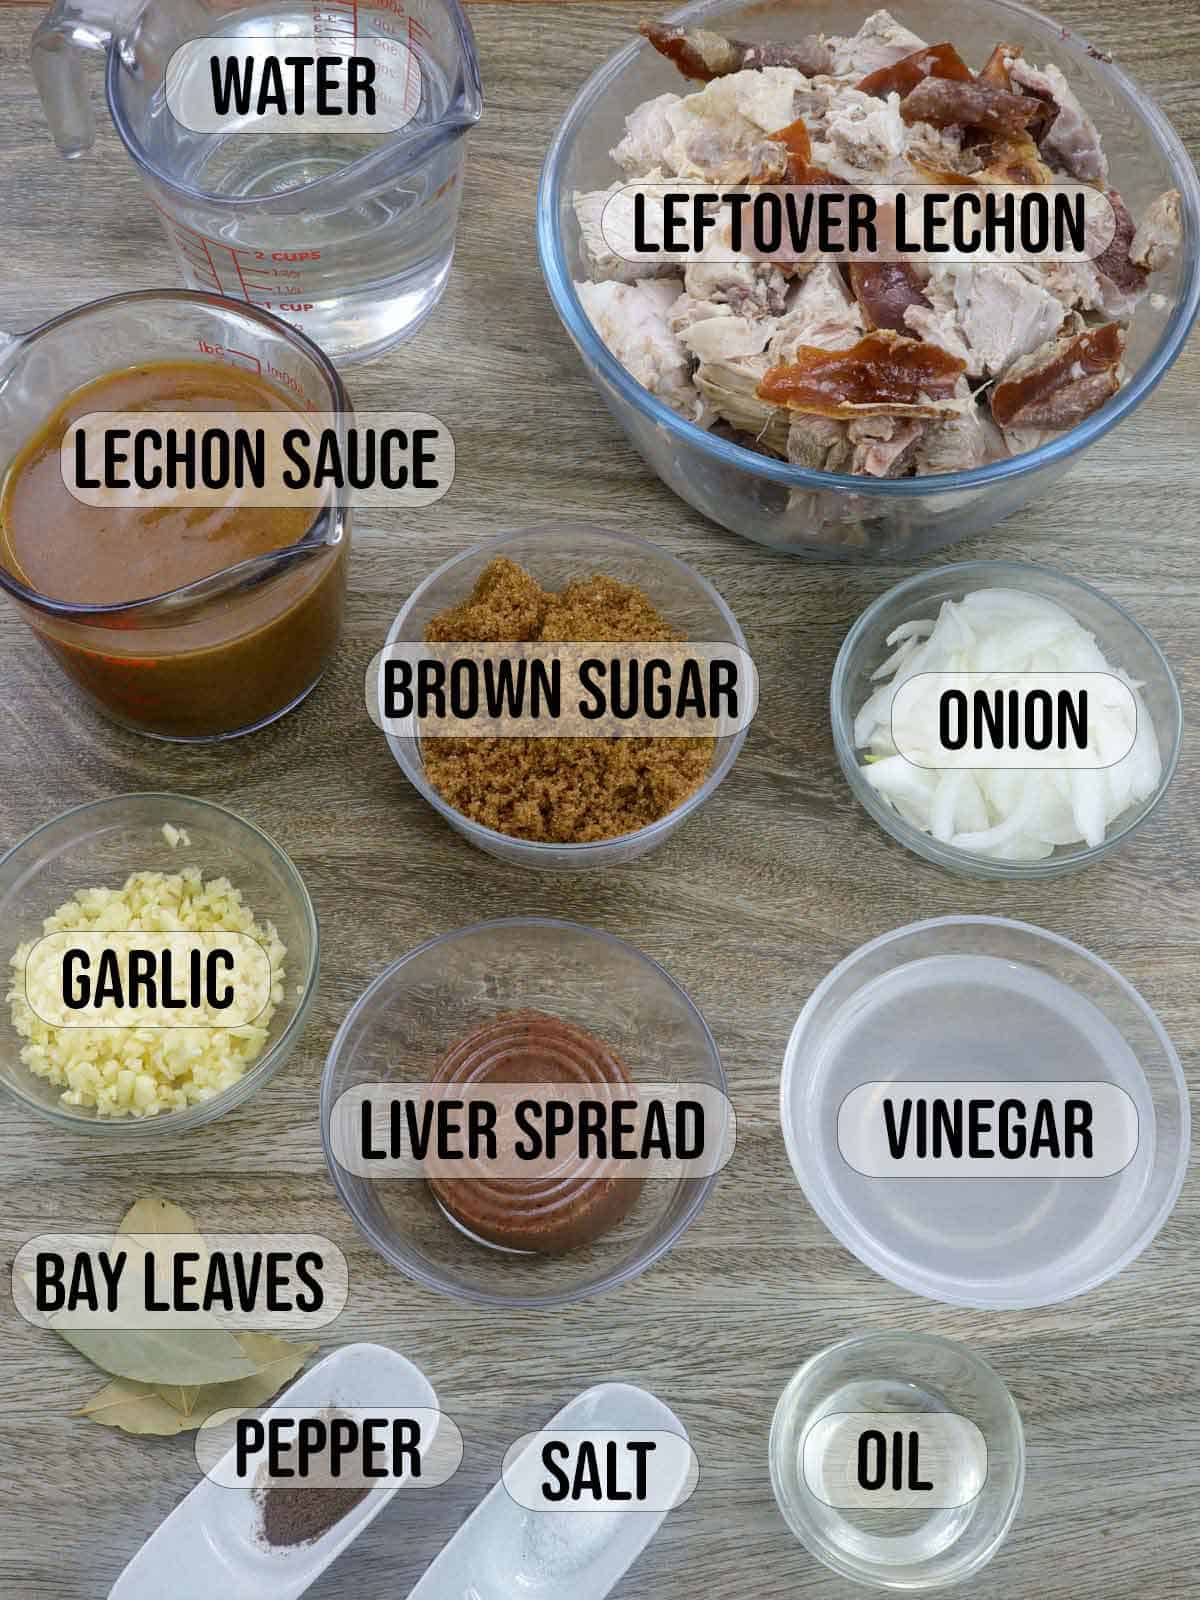 lechon sauce, liver spread, chopped roast pork, onions, vinegar, garlic, bay leaves, water, salt, pepper, brown sugar, and oil in bowls.